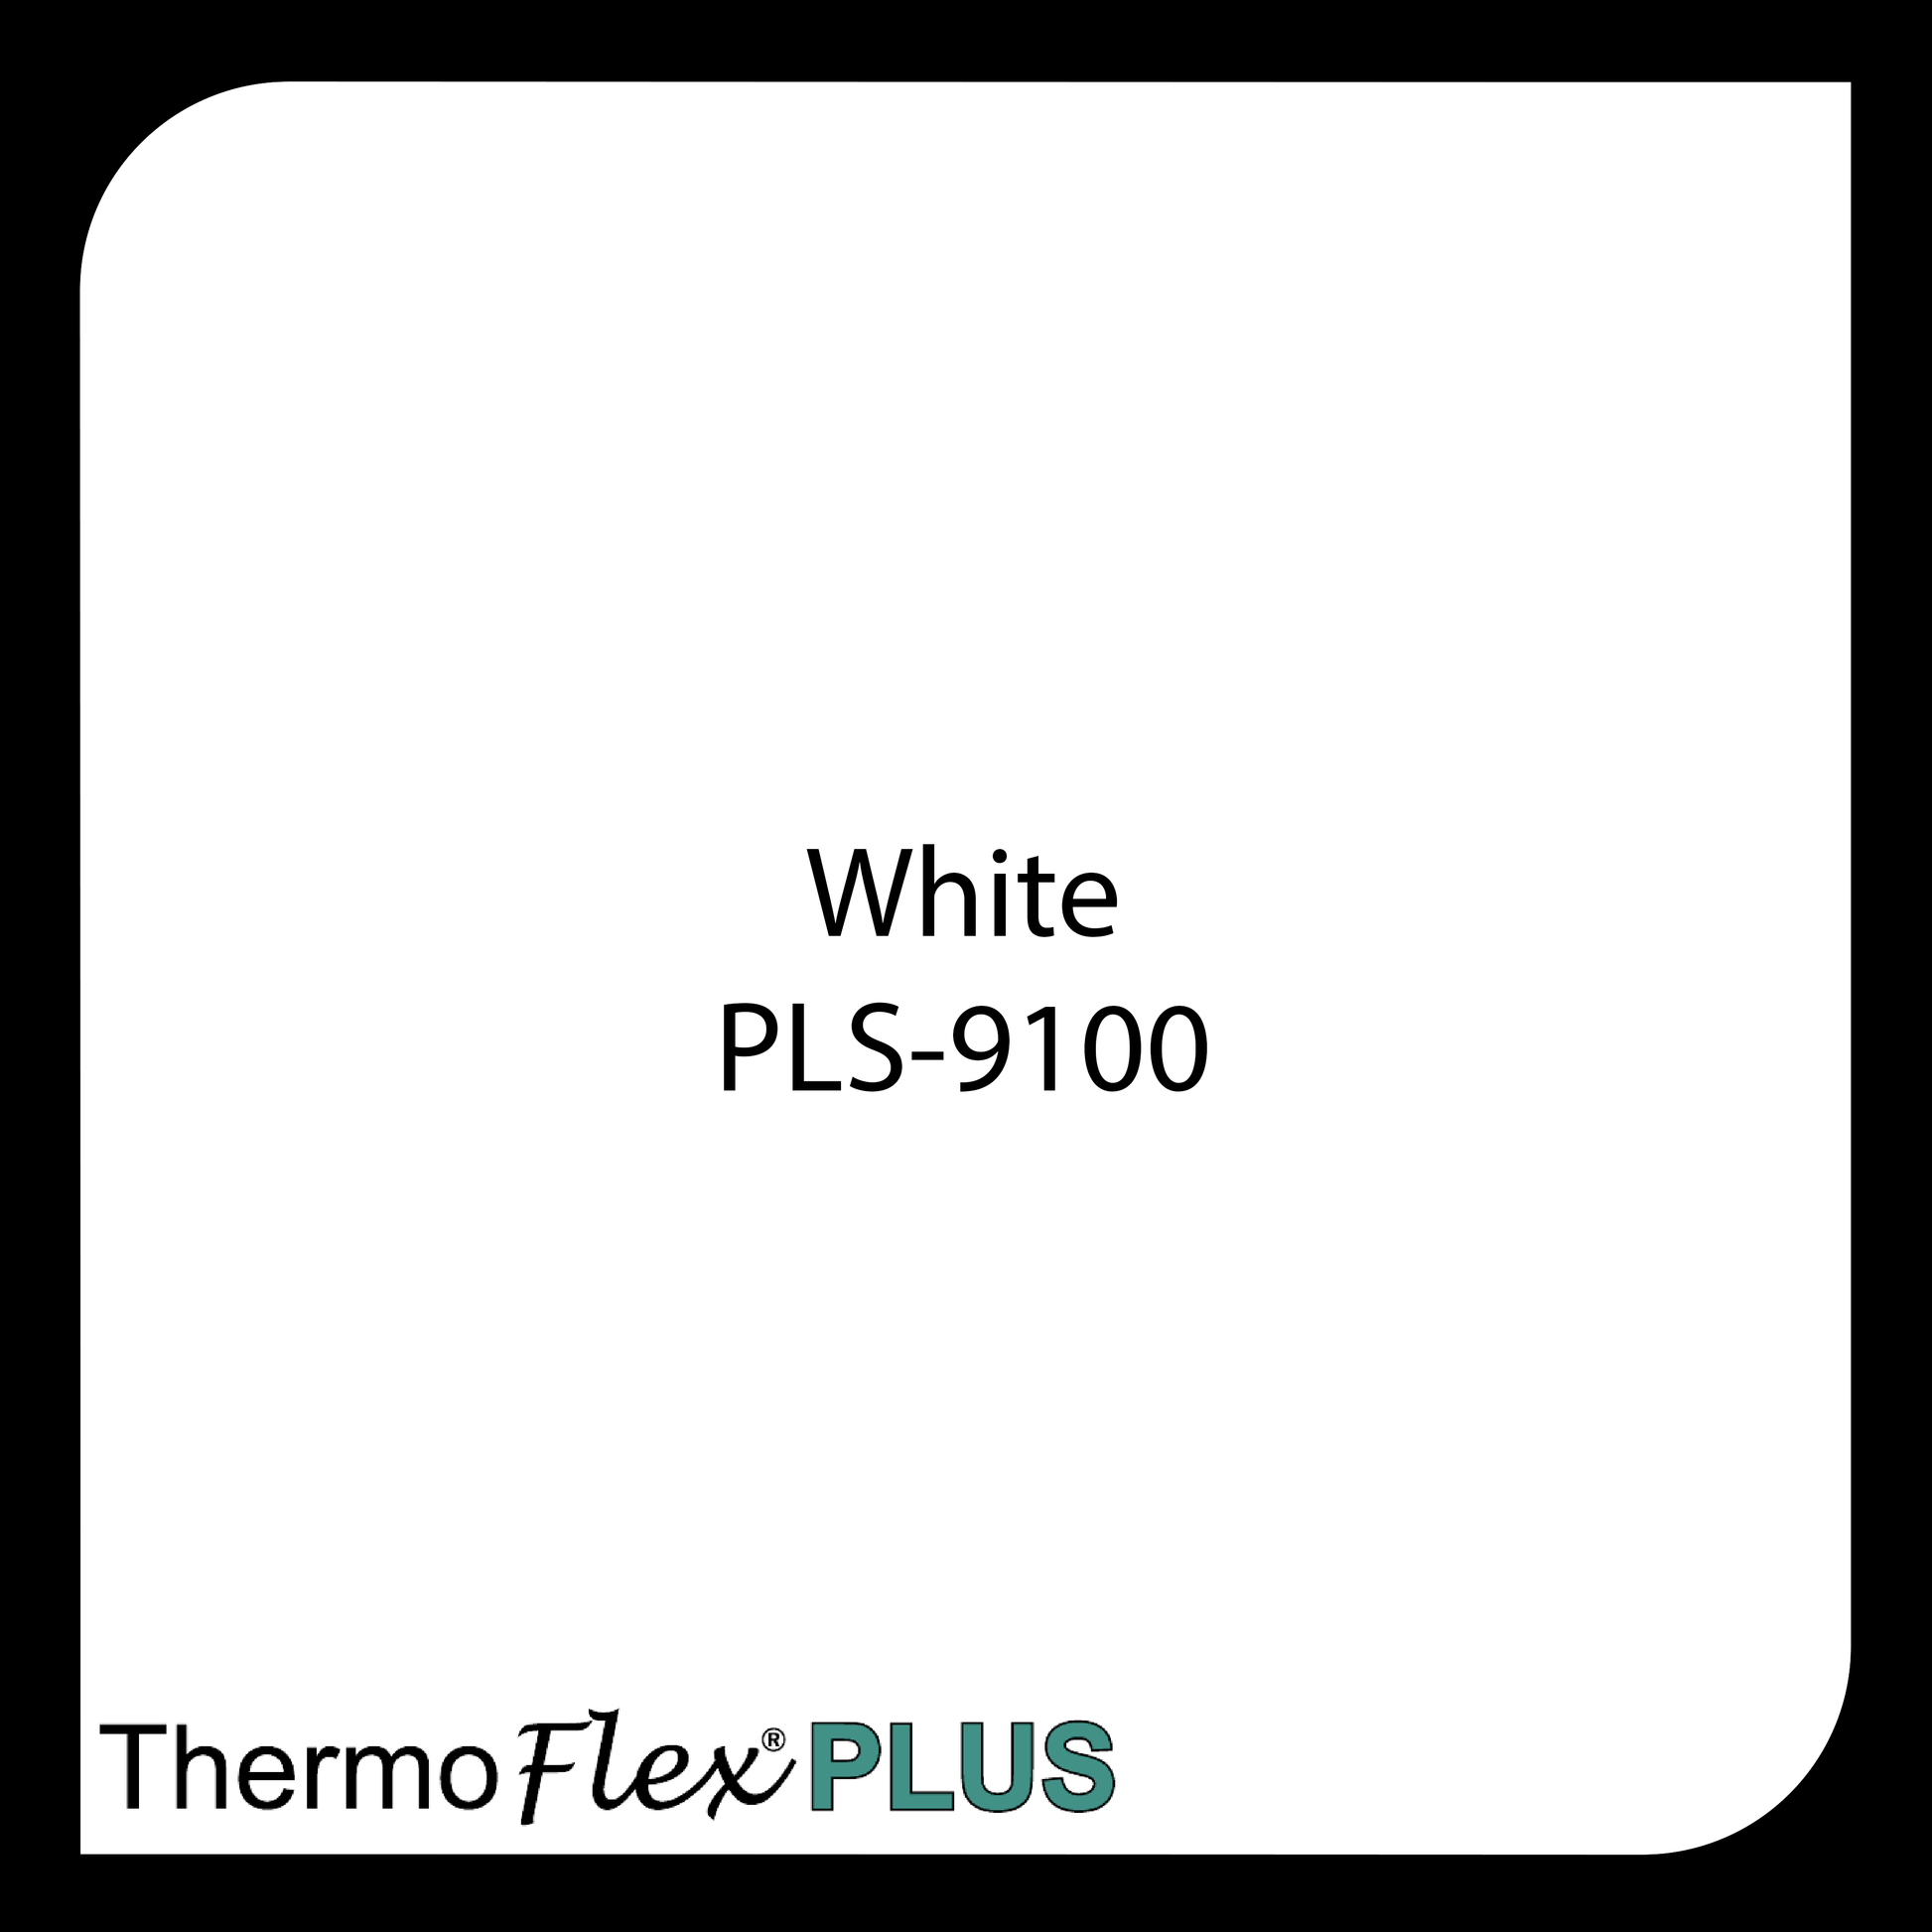 ThermoFlex Plus 15 x 5' Roll Black Heat Transfer Vinyl